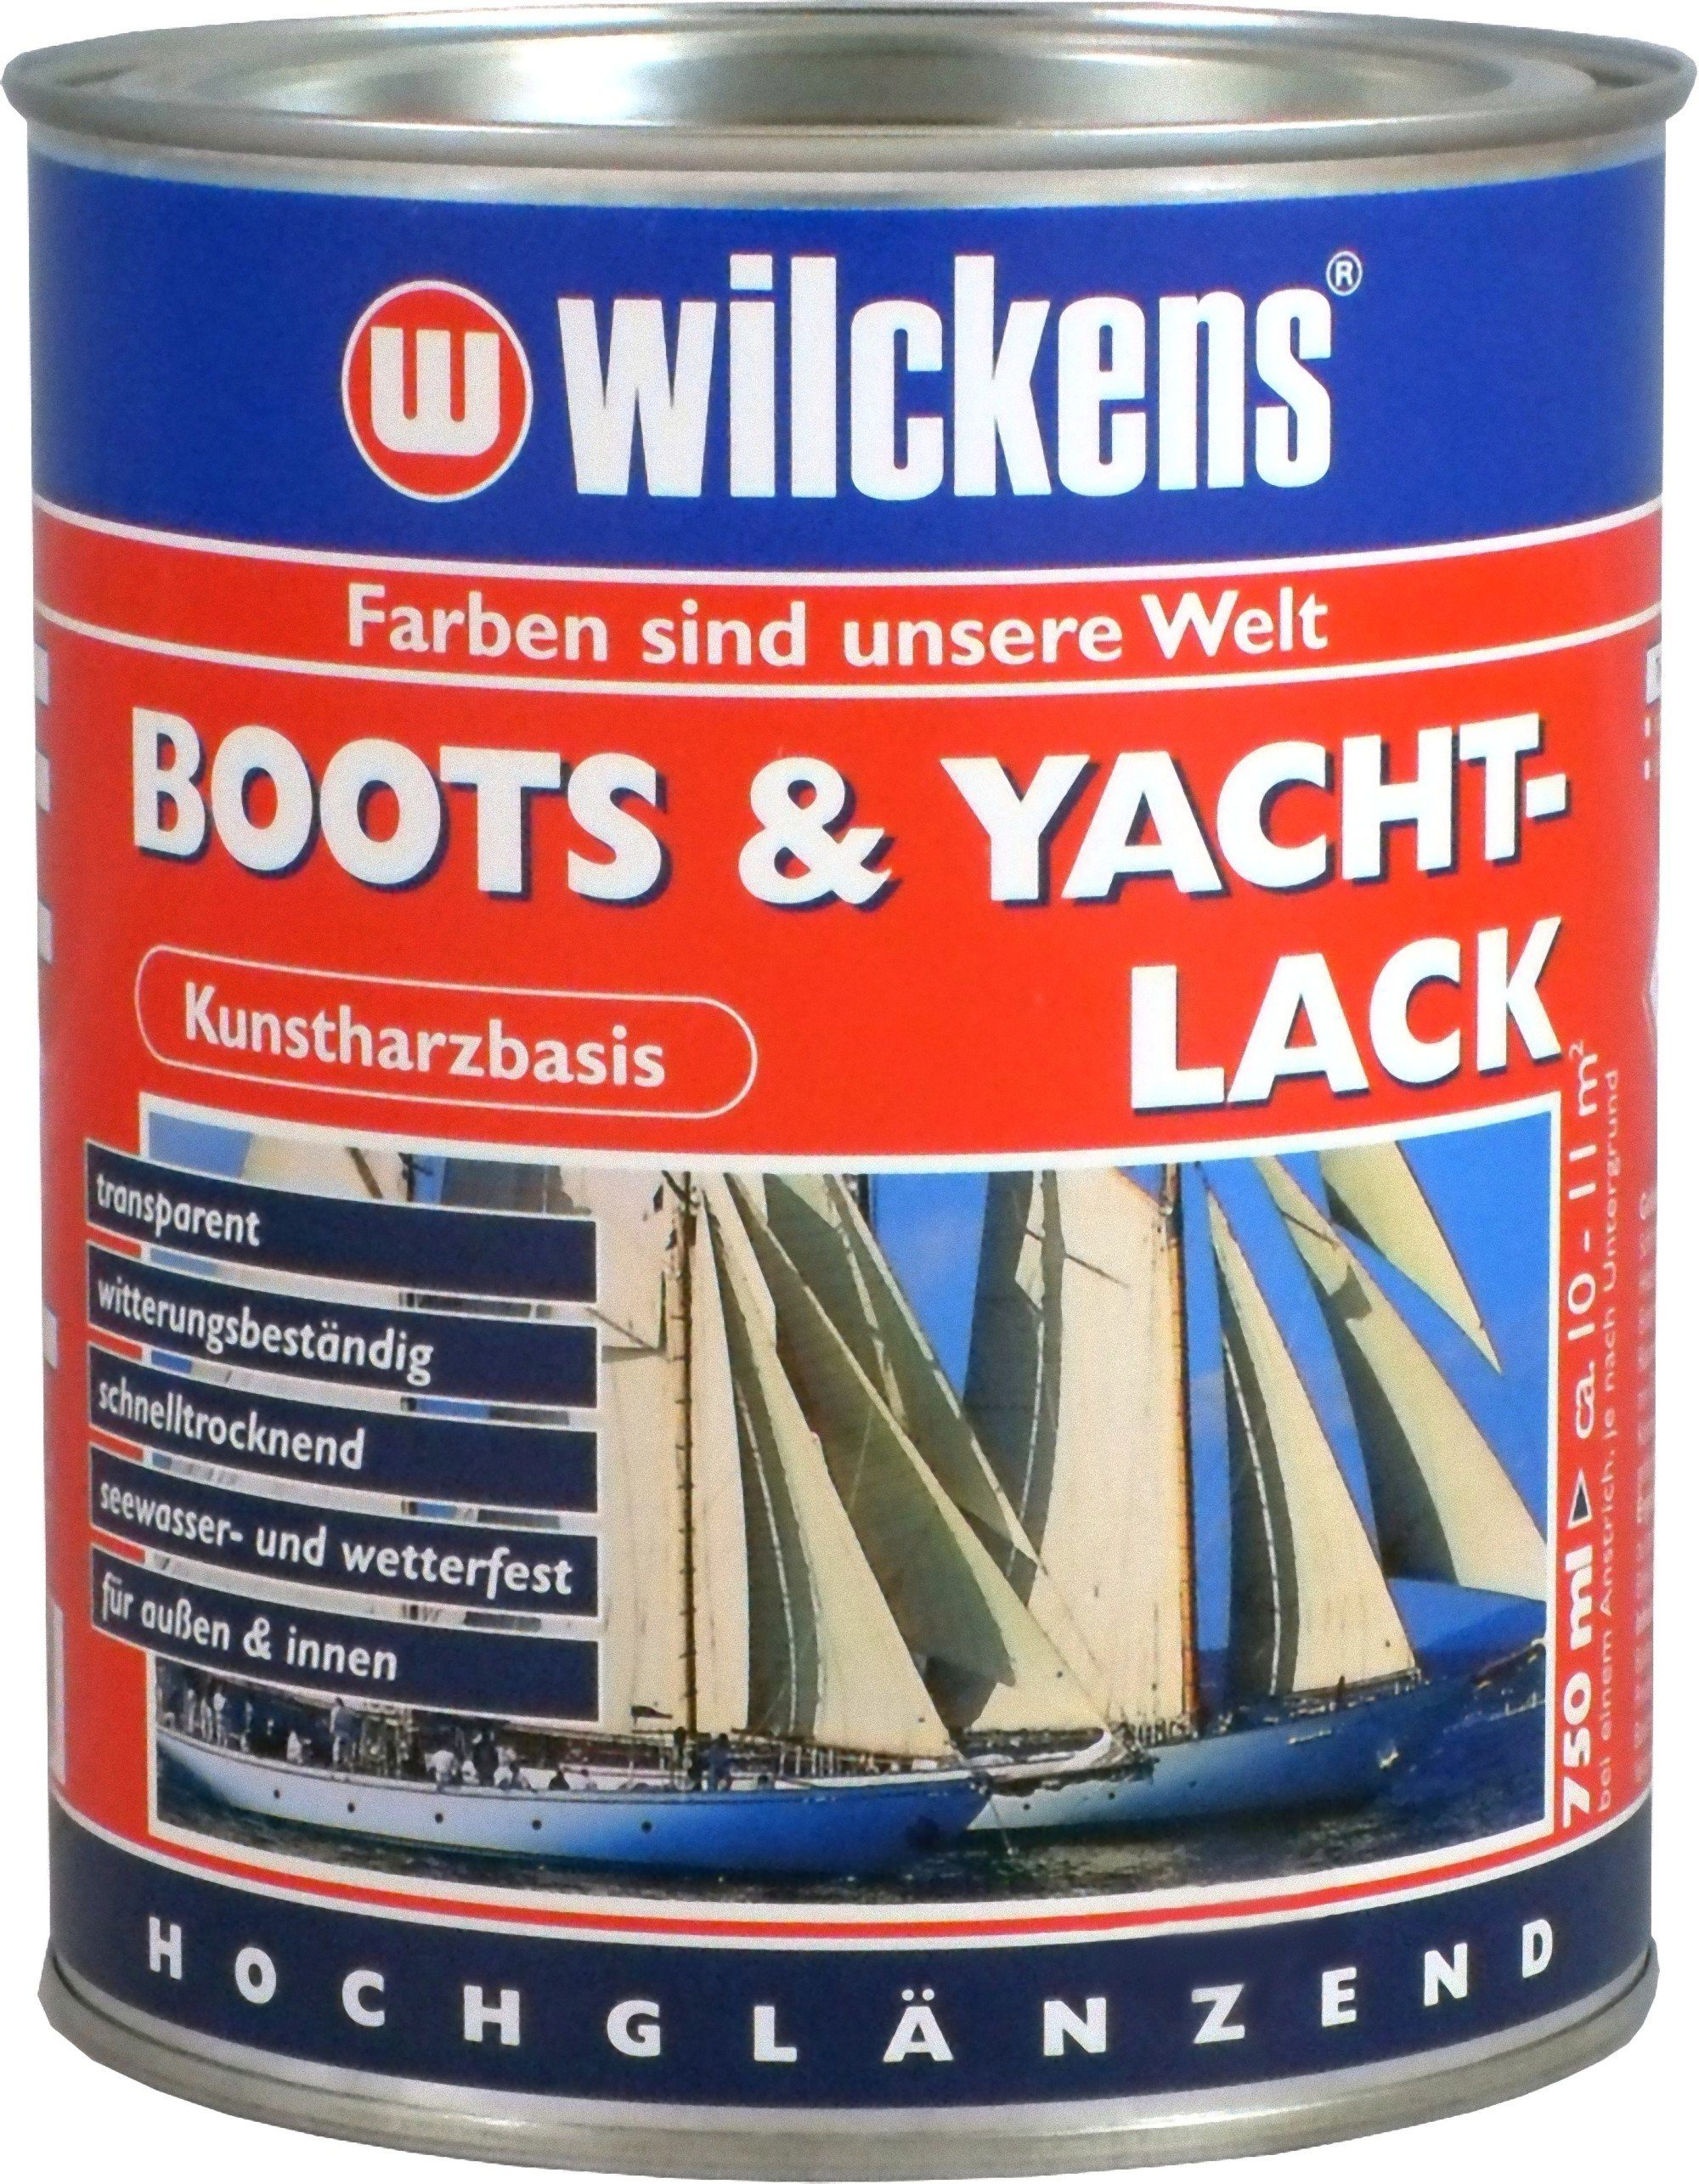 Yachtlack Klarlack Yacht Farben Lack Boot Bootslack Farblos 0,75l Holz Lack, Wilckens